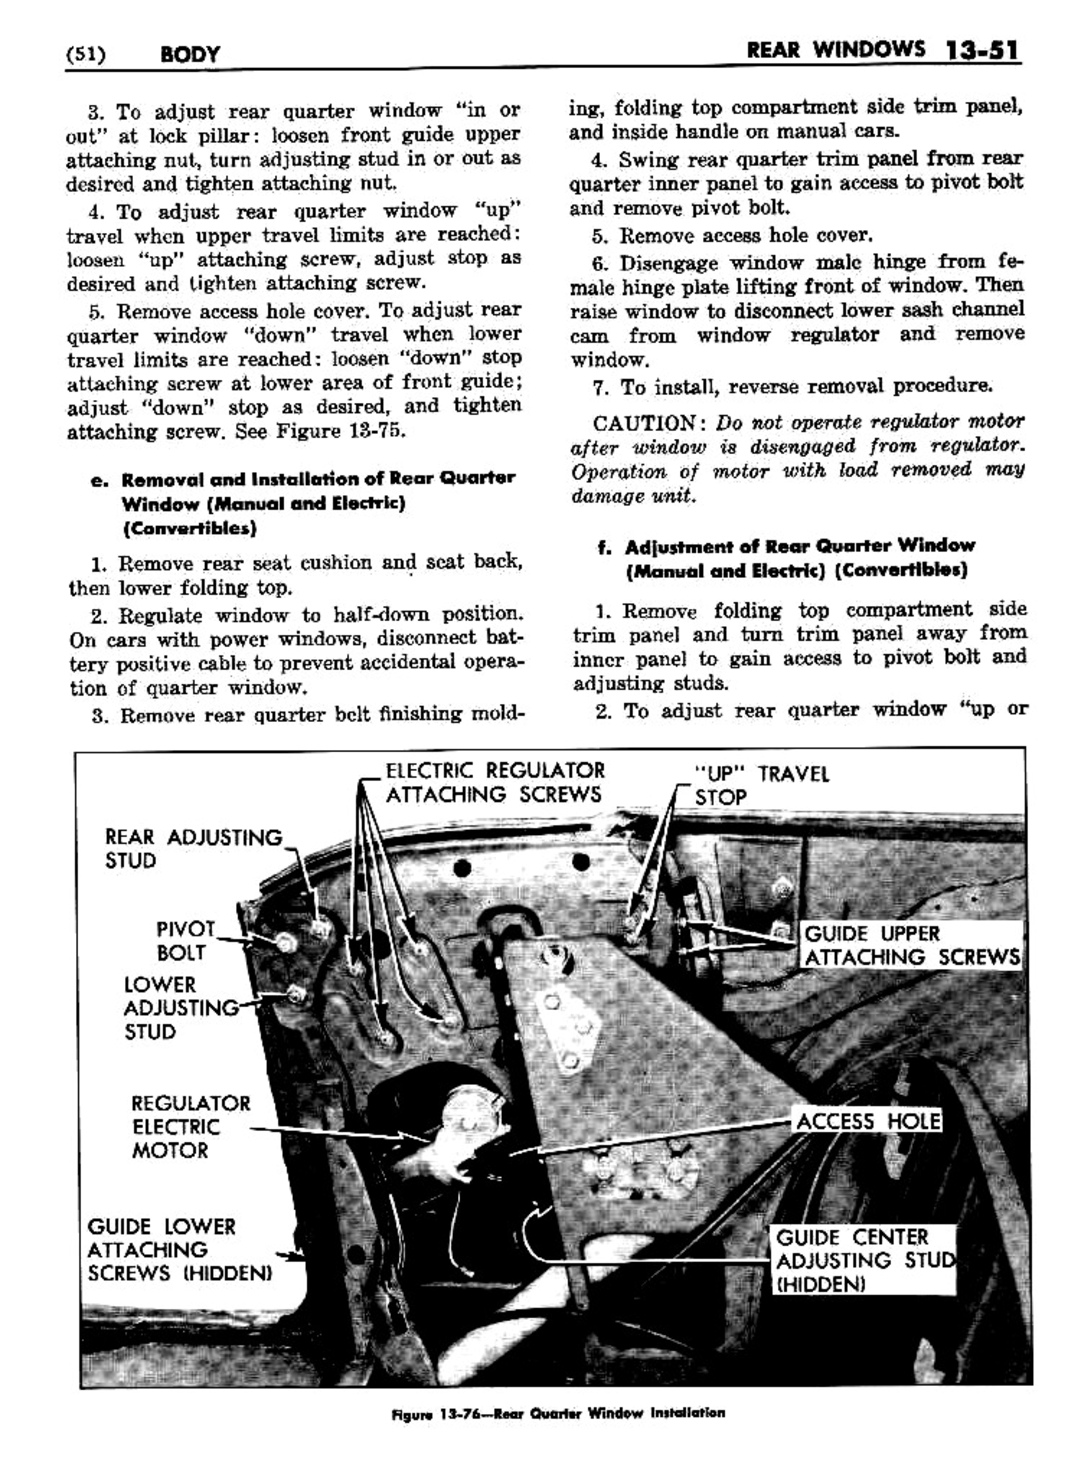 n_1957 Buick Body Service Manual-053-053.jpg